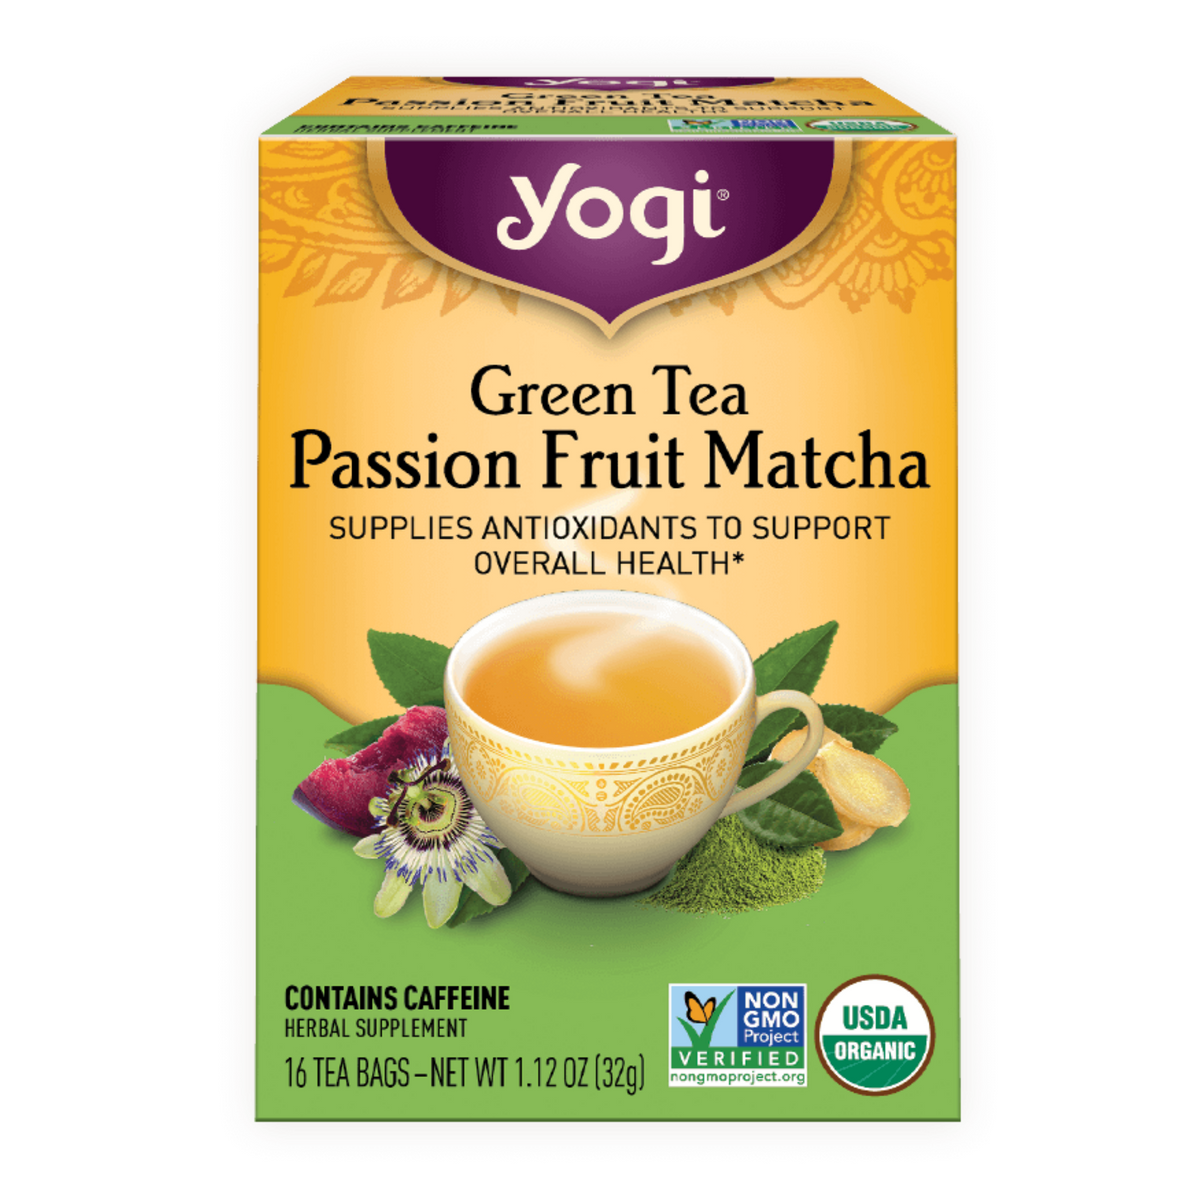 Primary Image of Green Tea Passion Fruit Matcha Tea Bags